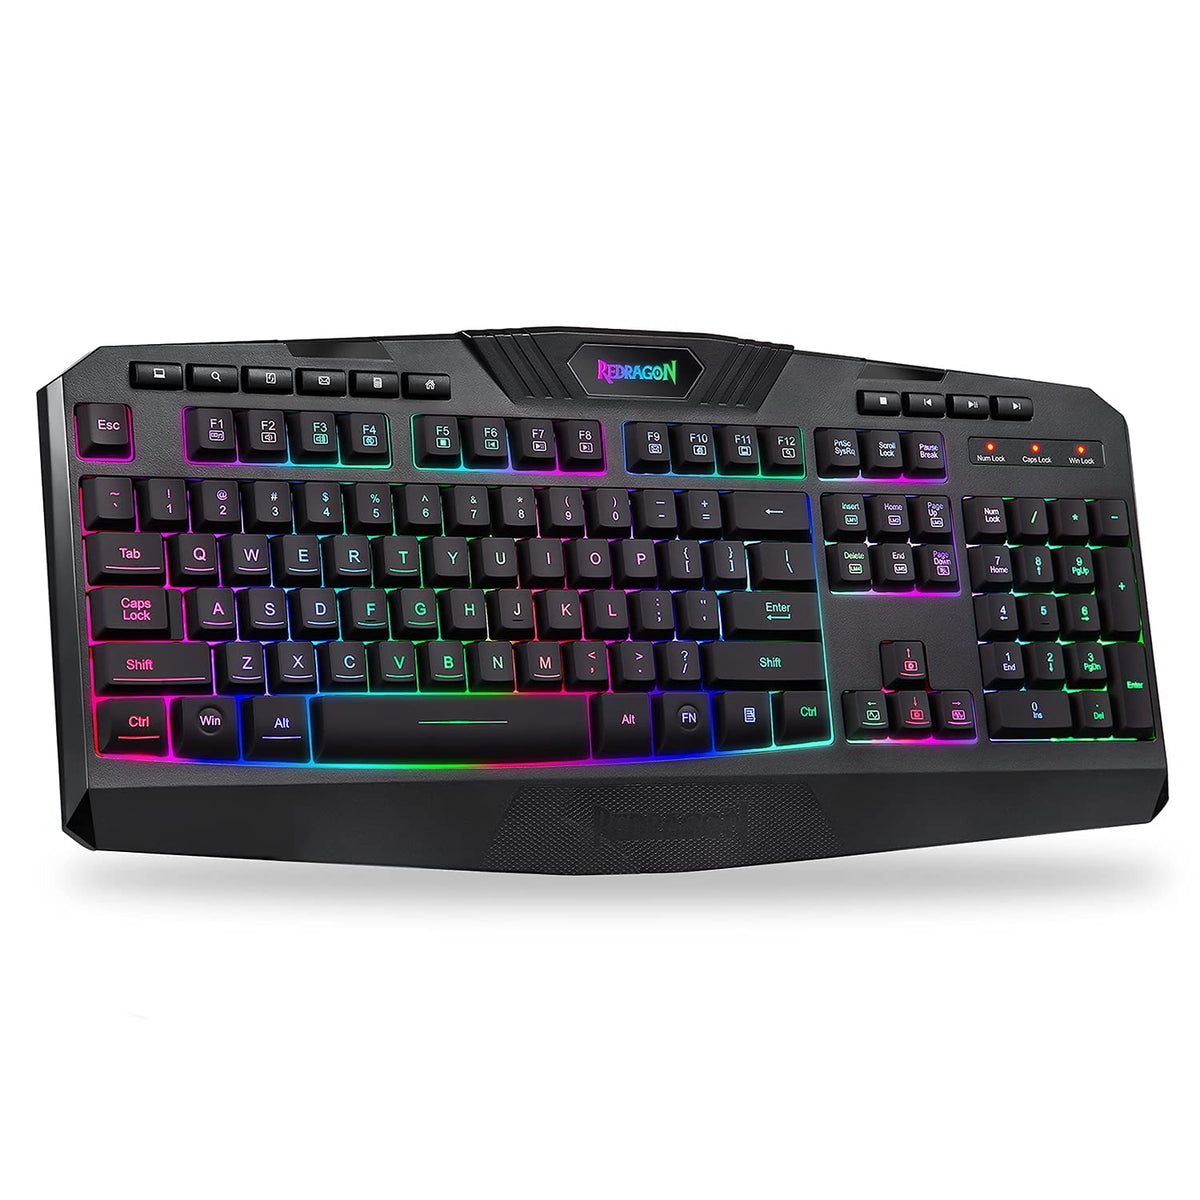 Redragon K503 Wireless Gaming Keyboard, RGB LED Backlit, Multimedia Keys, Silent Membrane Keyboard with Wrist Rest for Windows PC Games (Black)